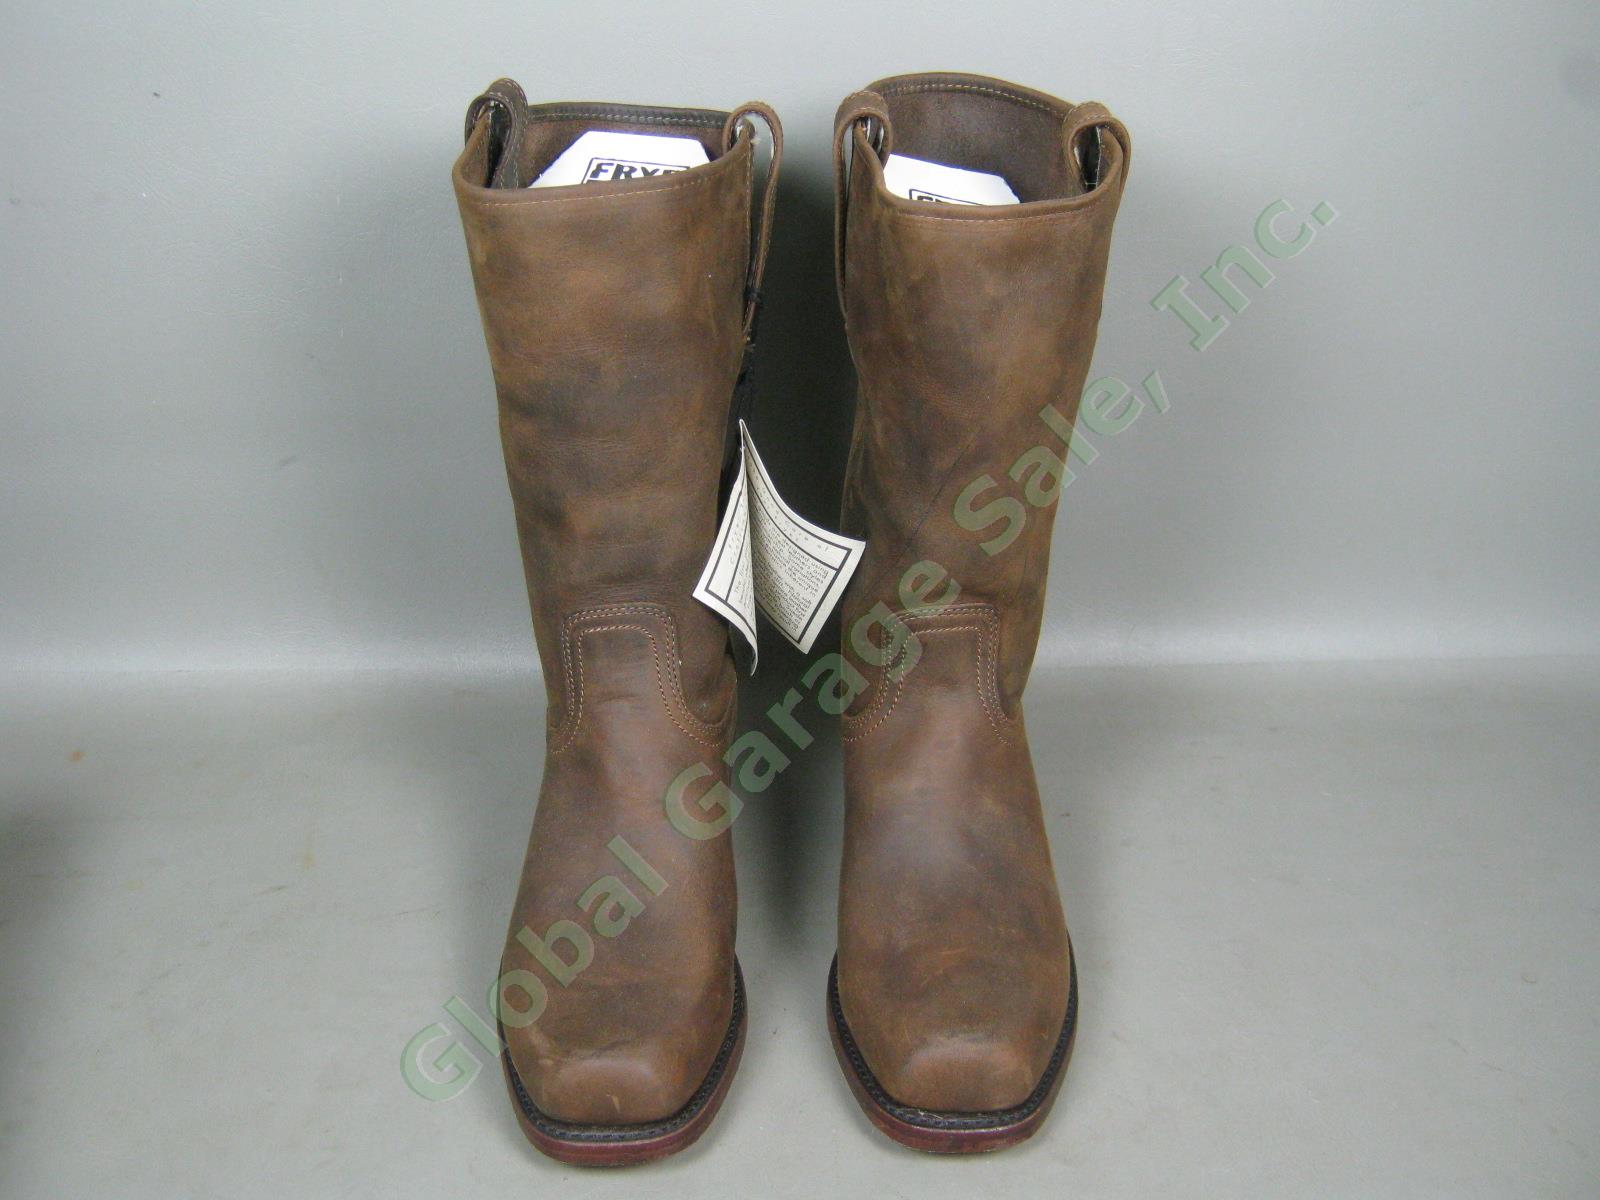 Mens Frye Cavalry 12L Tan Leather Boots Worn Once 9.5 Medium Width W/Box 87410-1 5